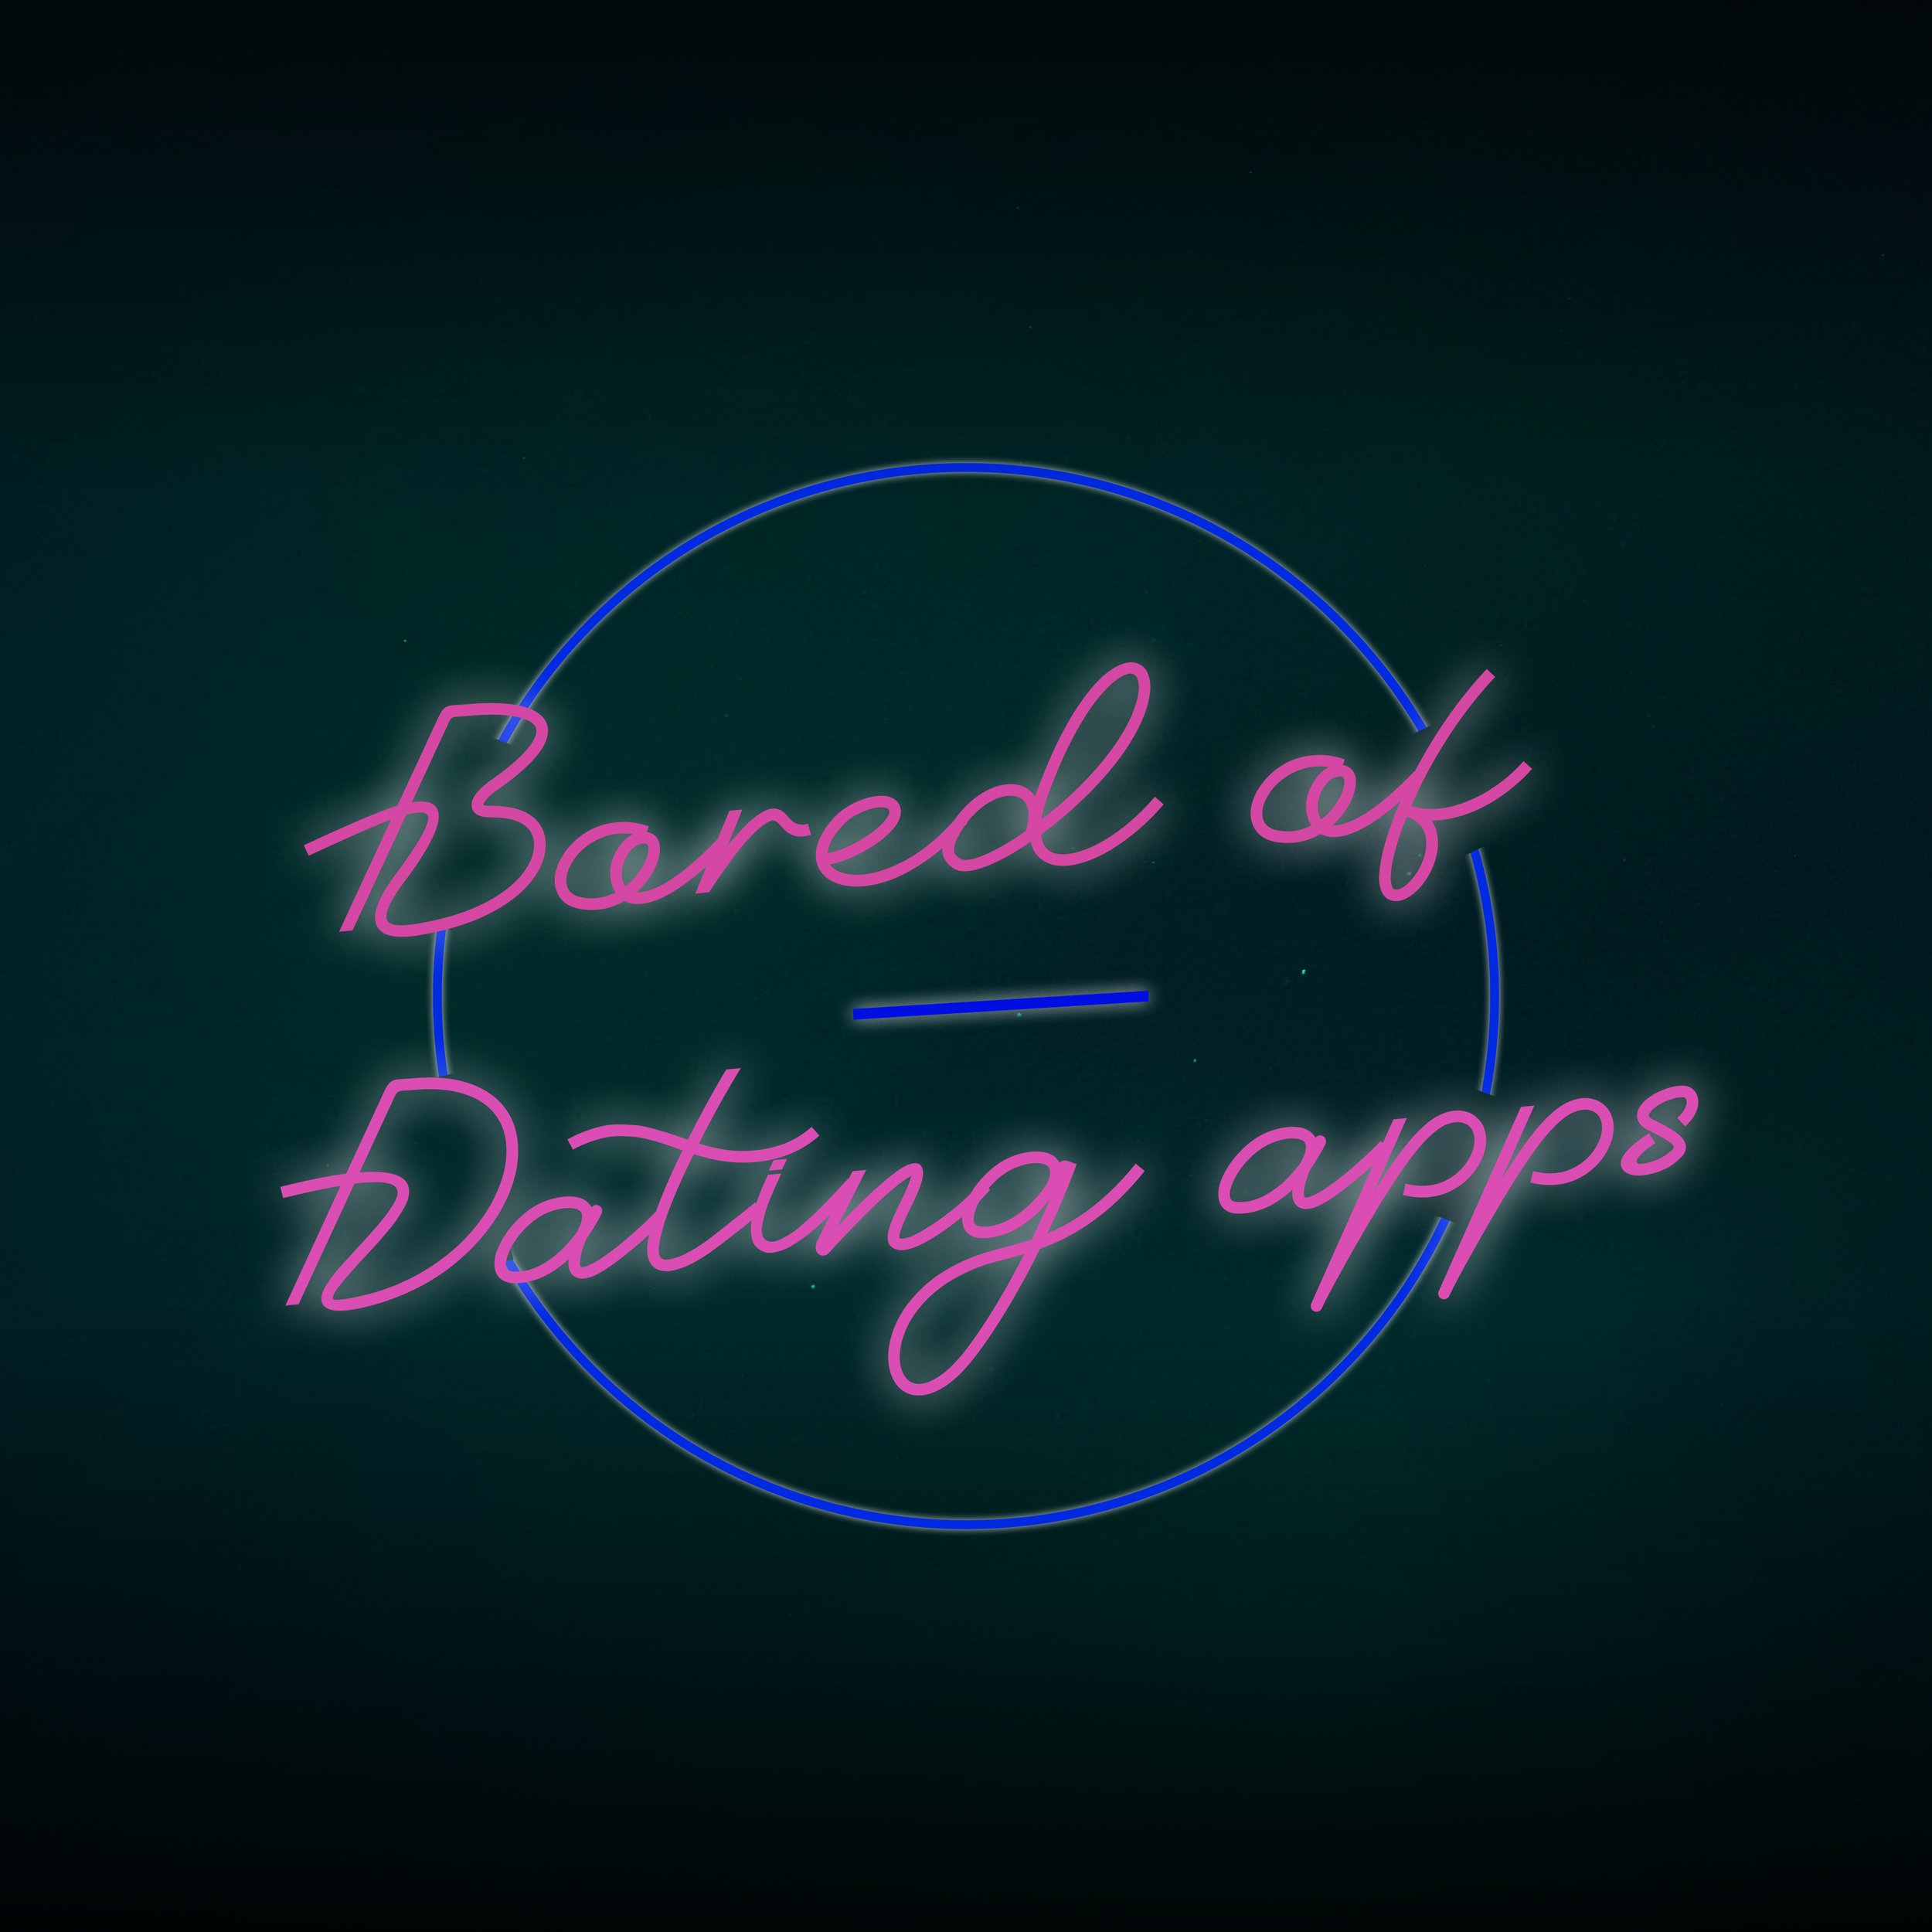 old school dating app